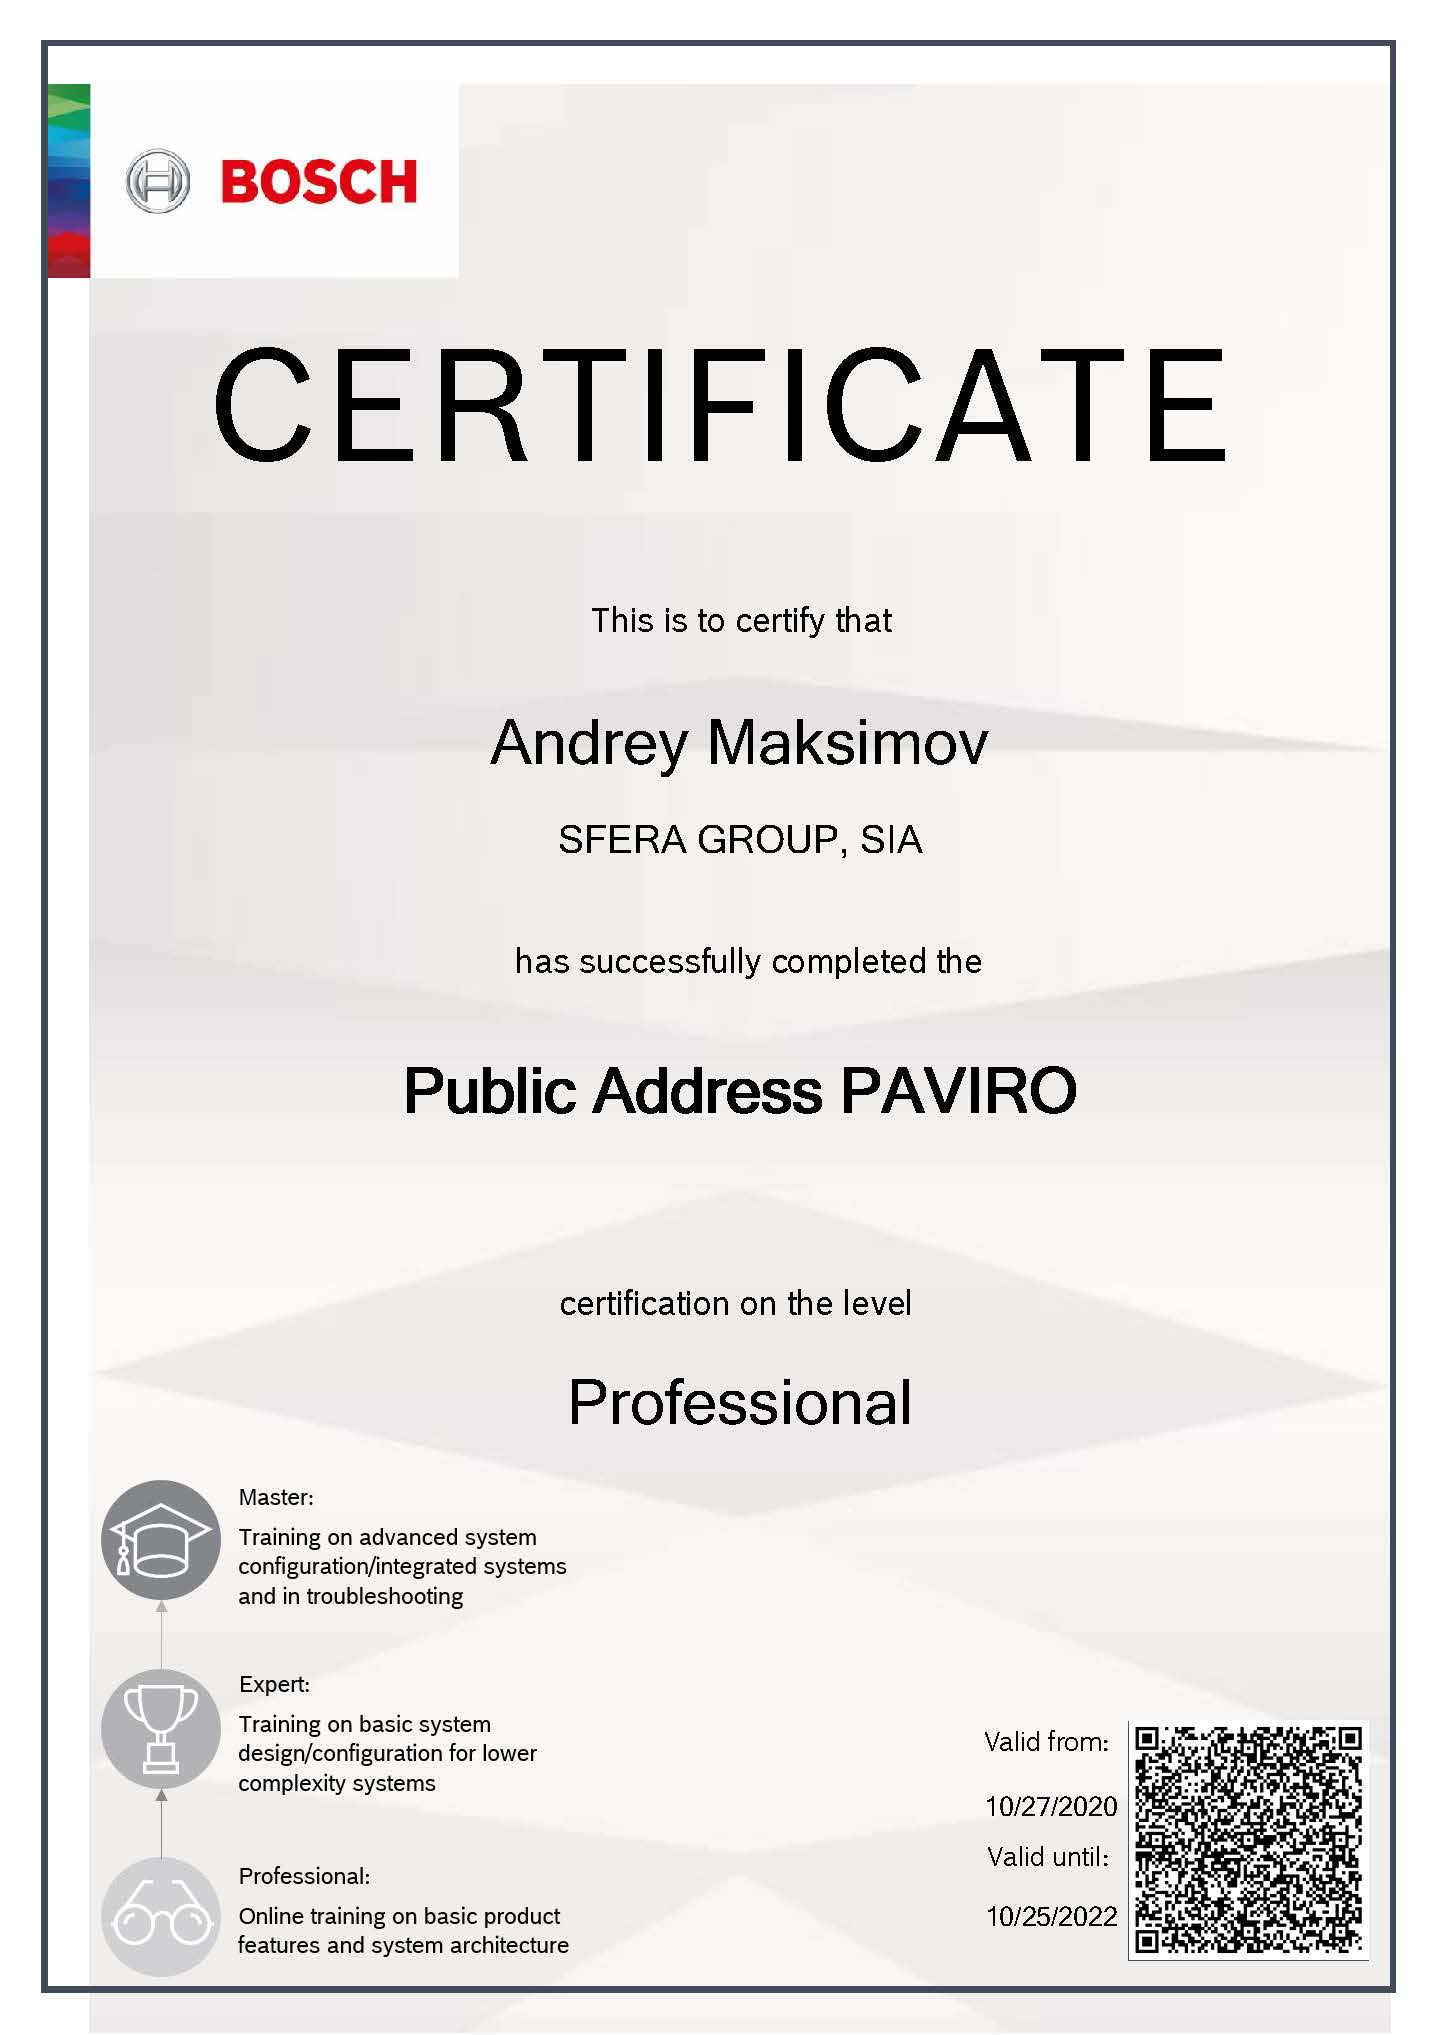 Bosch PAVIRO Technical Professional Certification